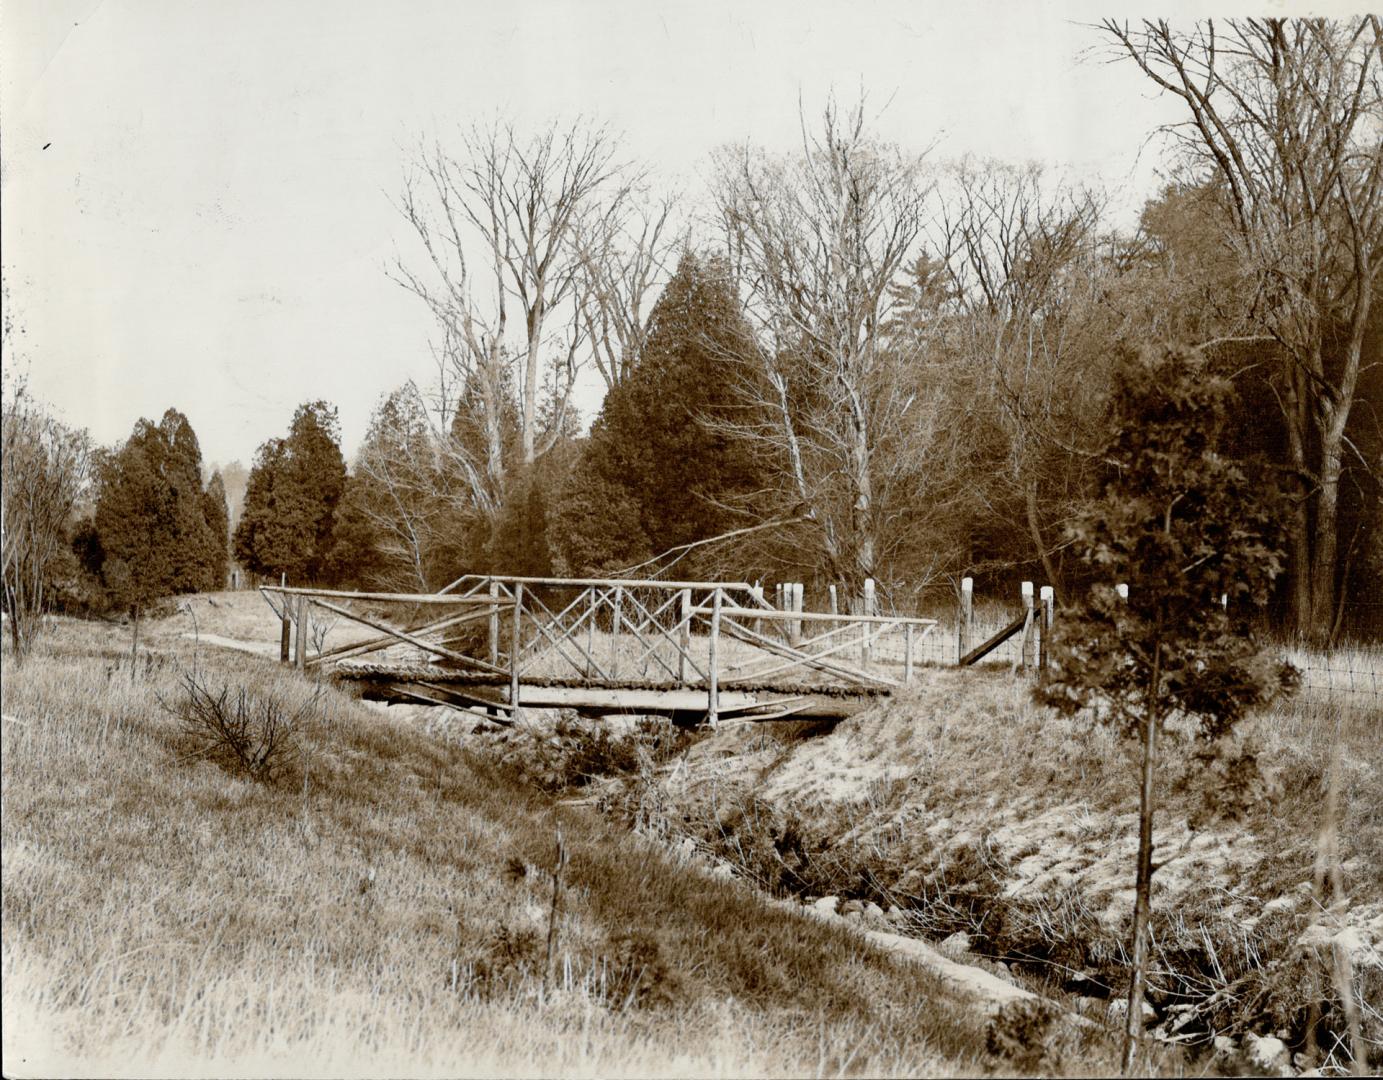 Sunnybrook farm picturesque rustic bridge over one of she winding creeks